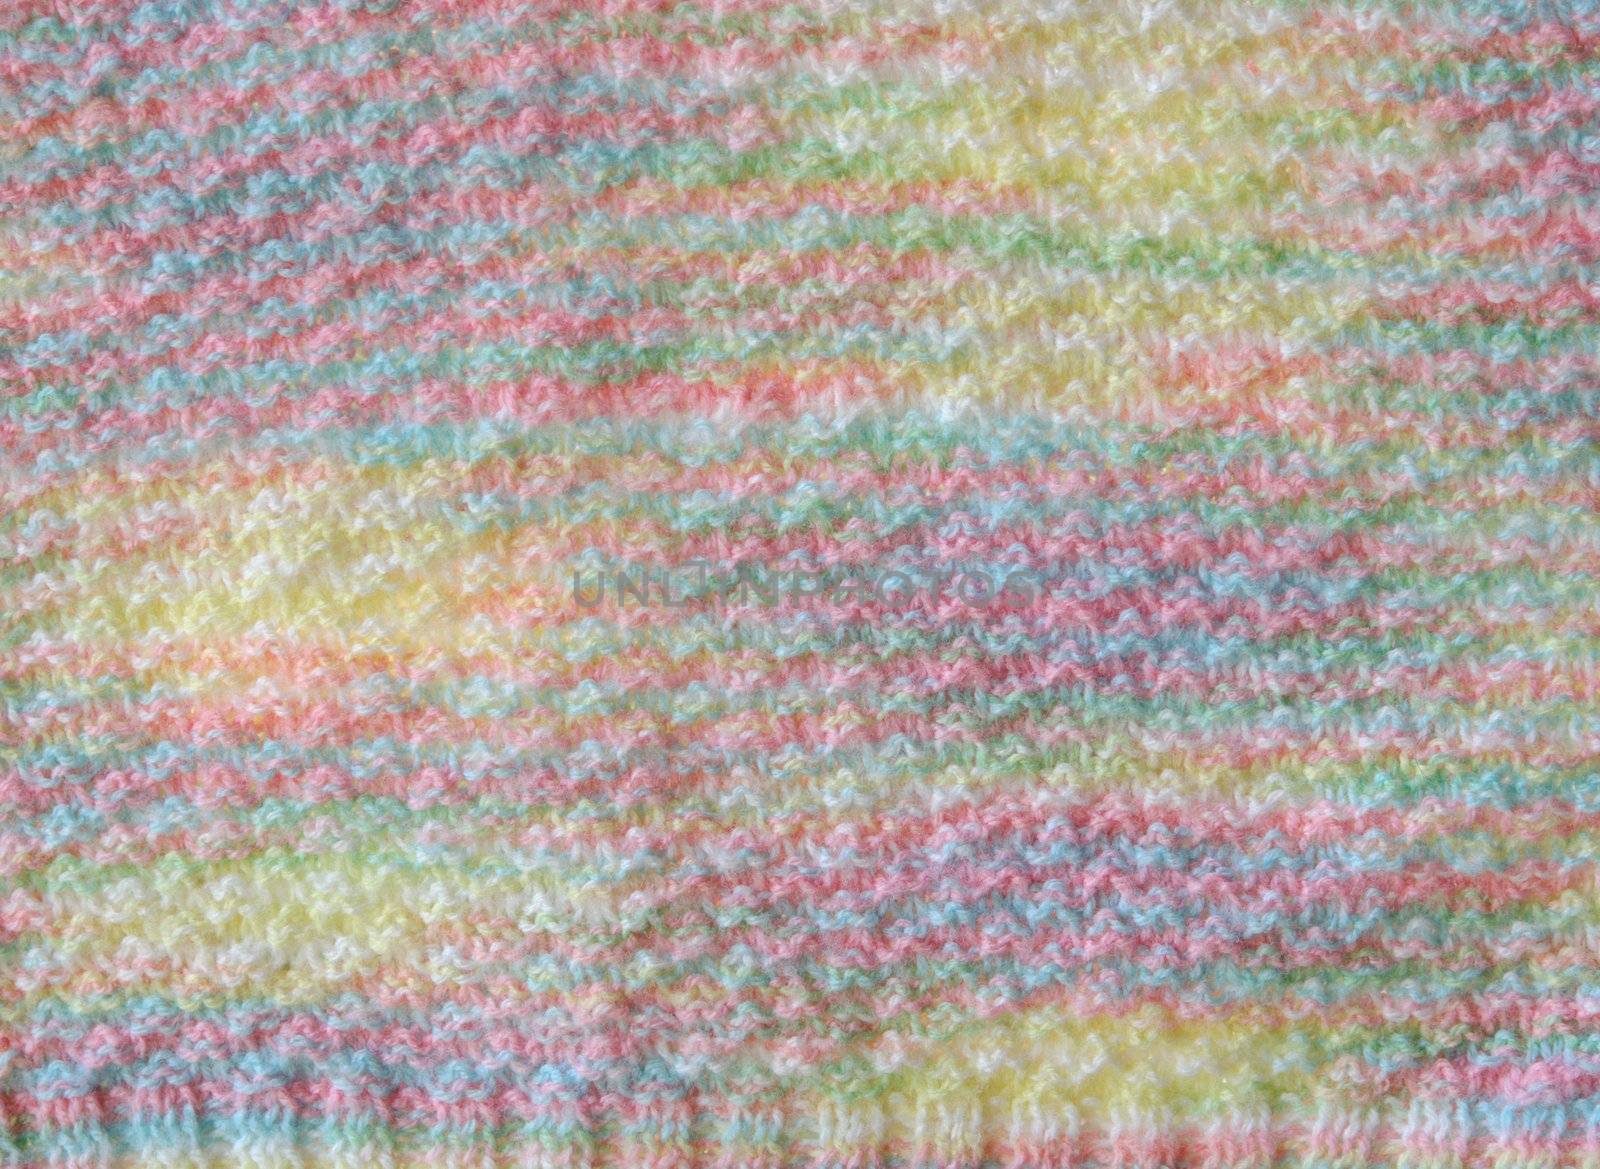 hand-knit baby sweater background by nebari